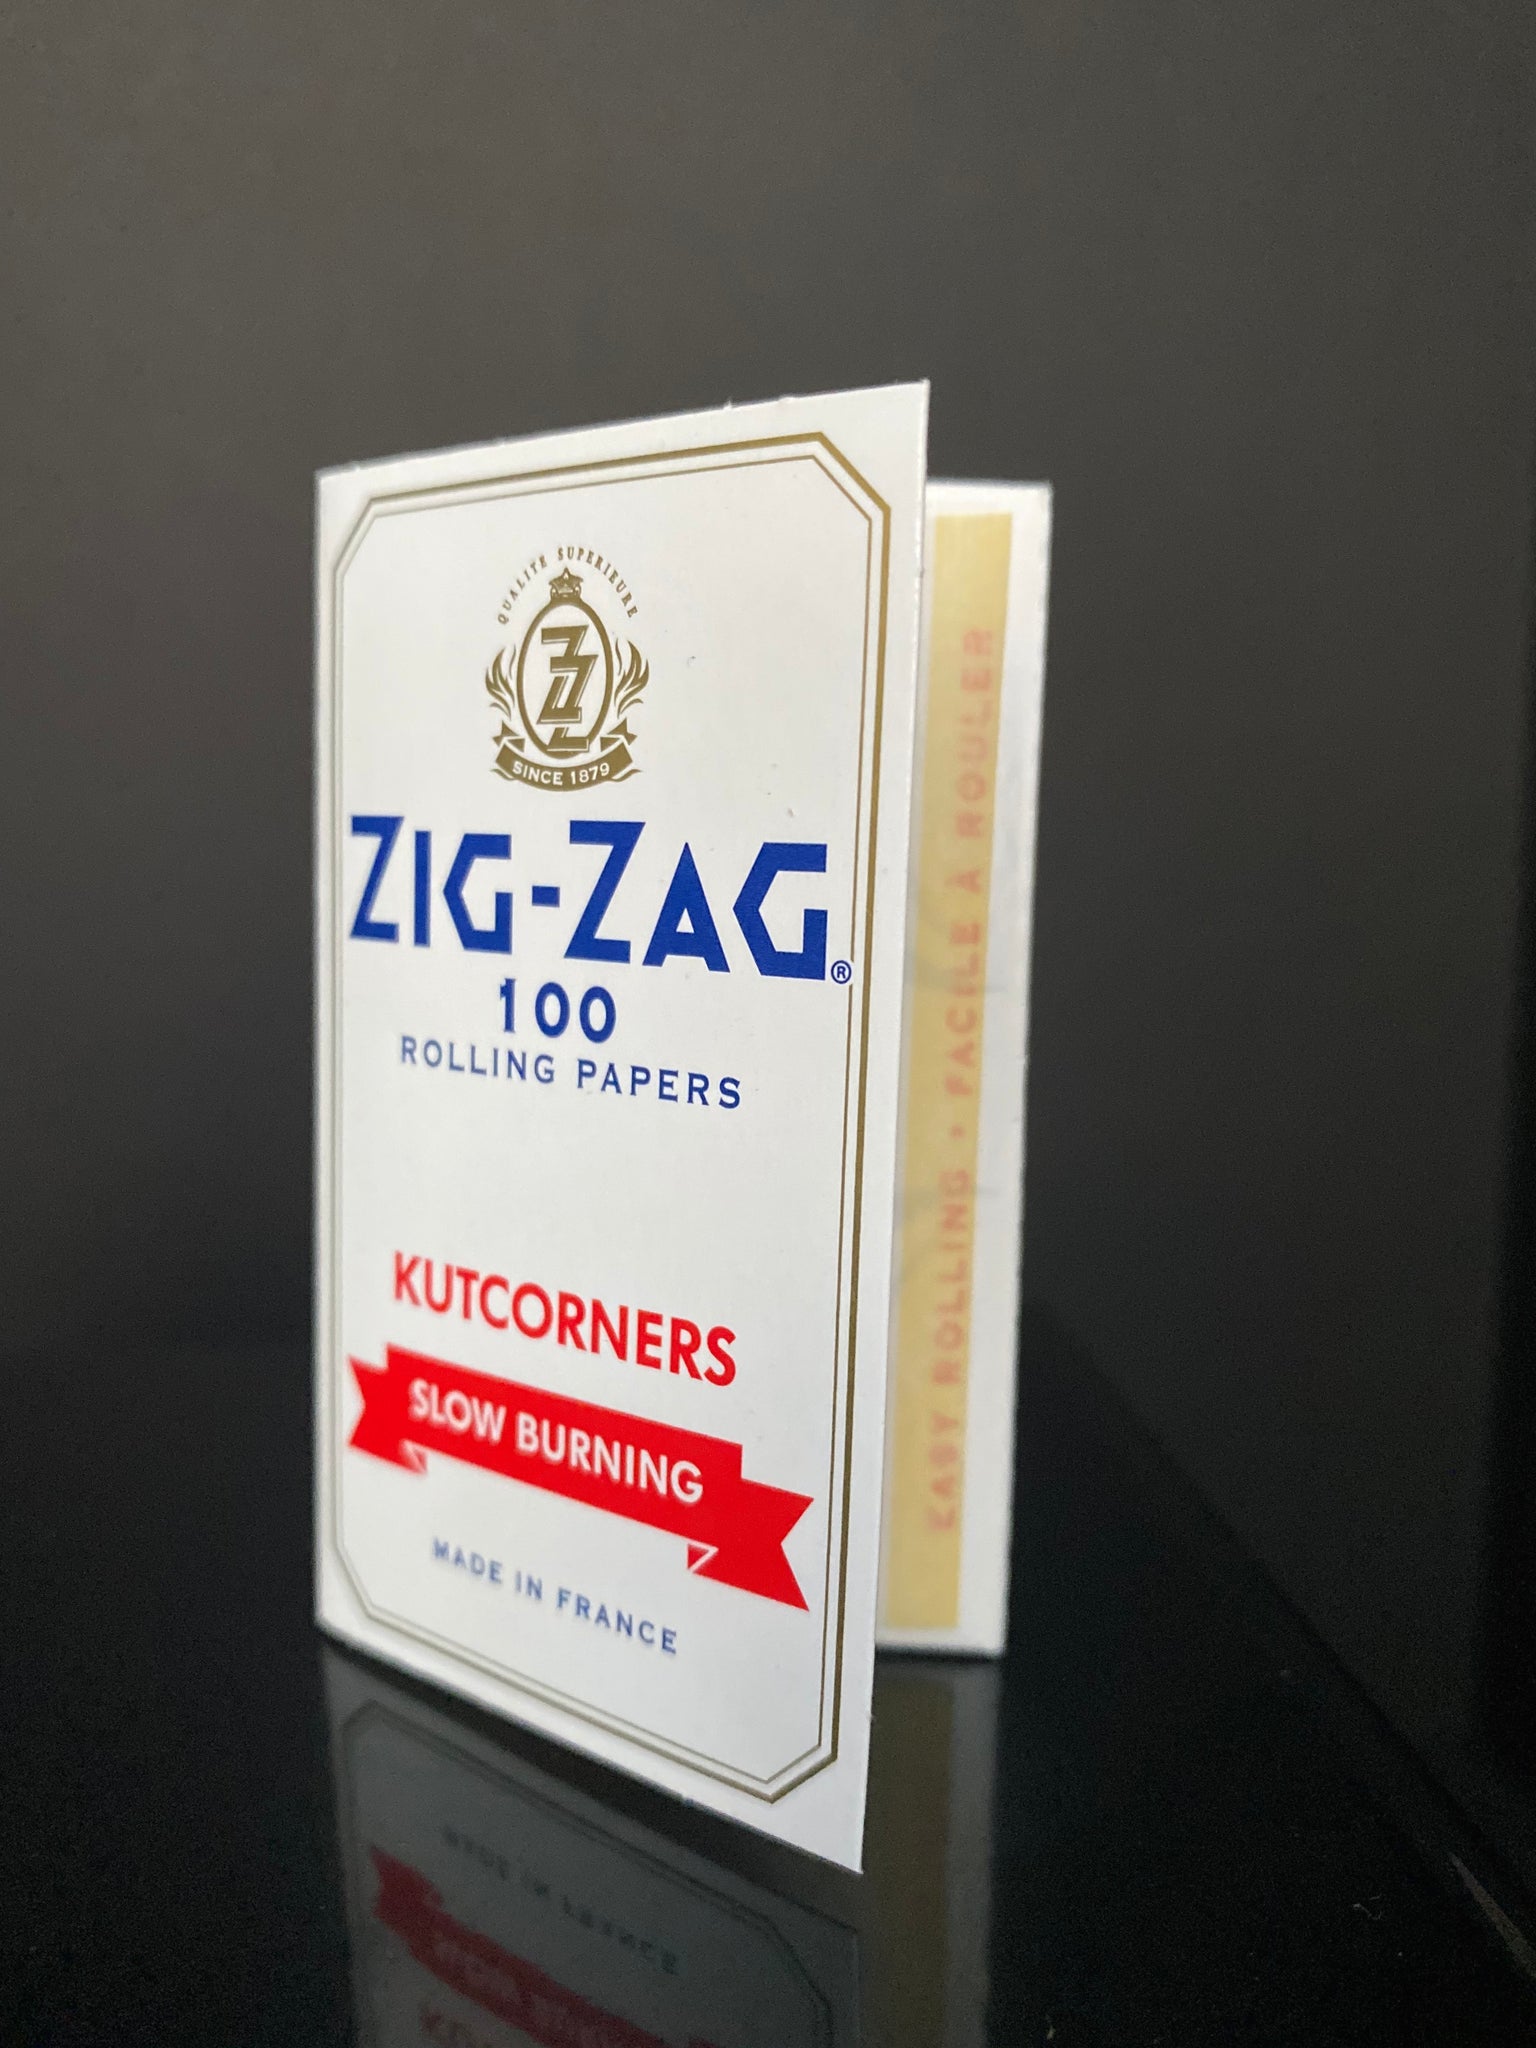 Zig Zag Slow burning White Papers Kutcorners